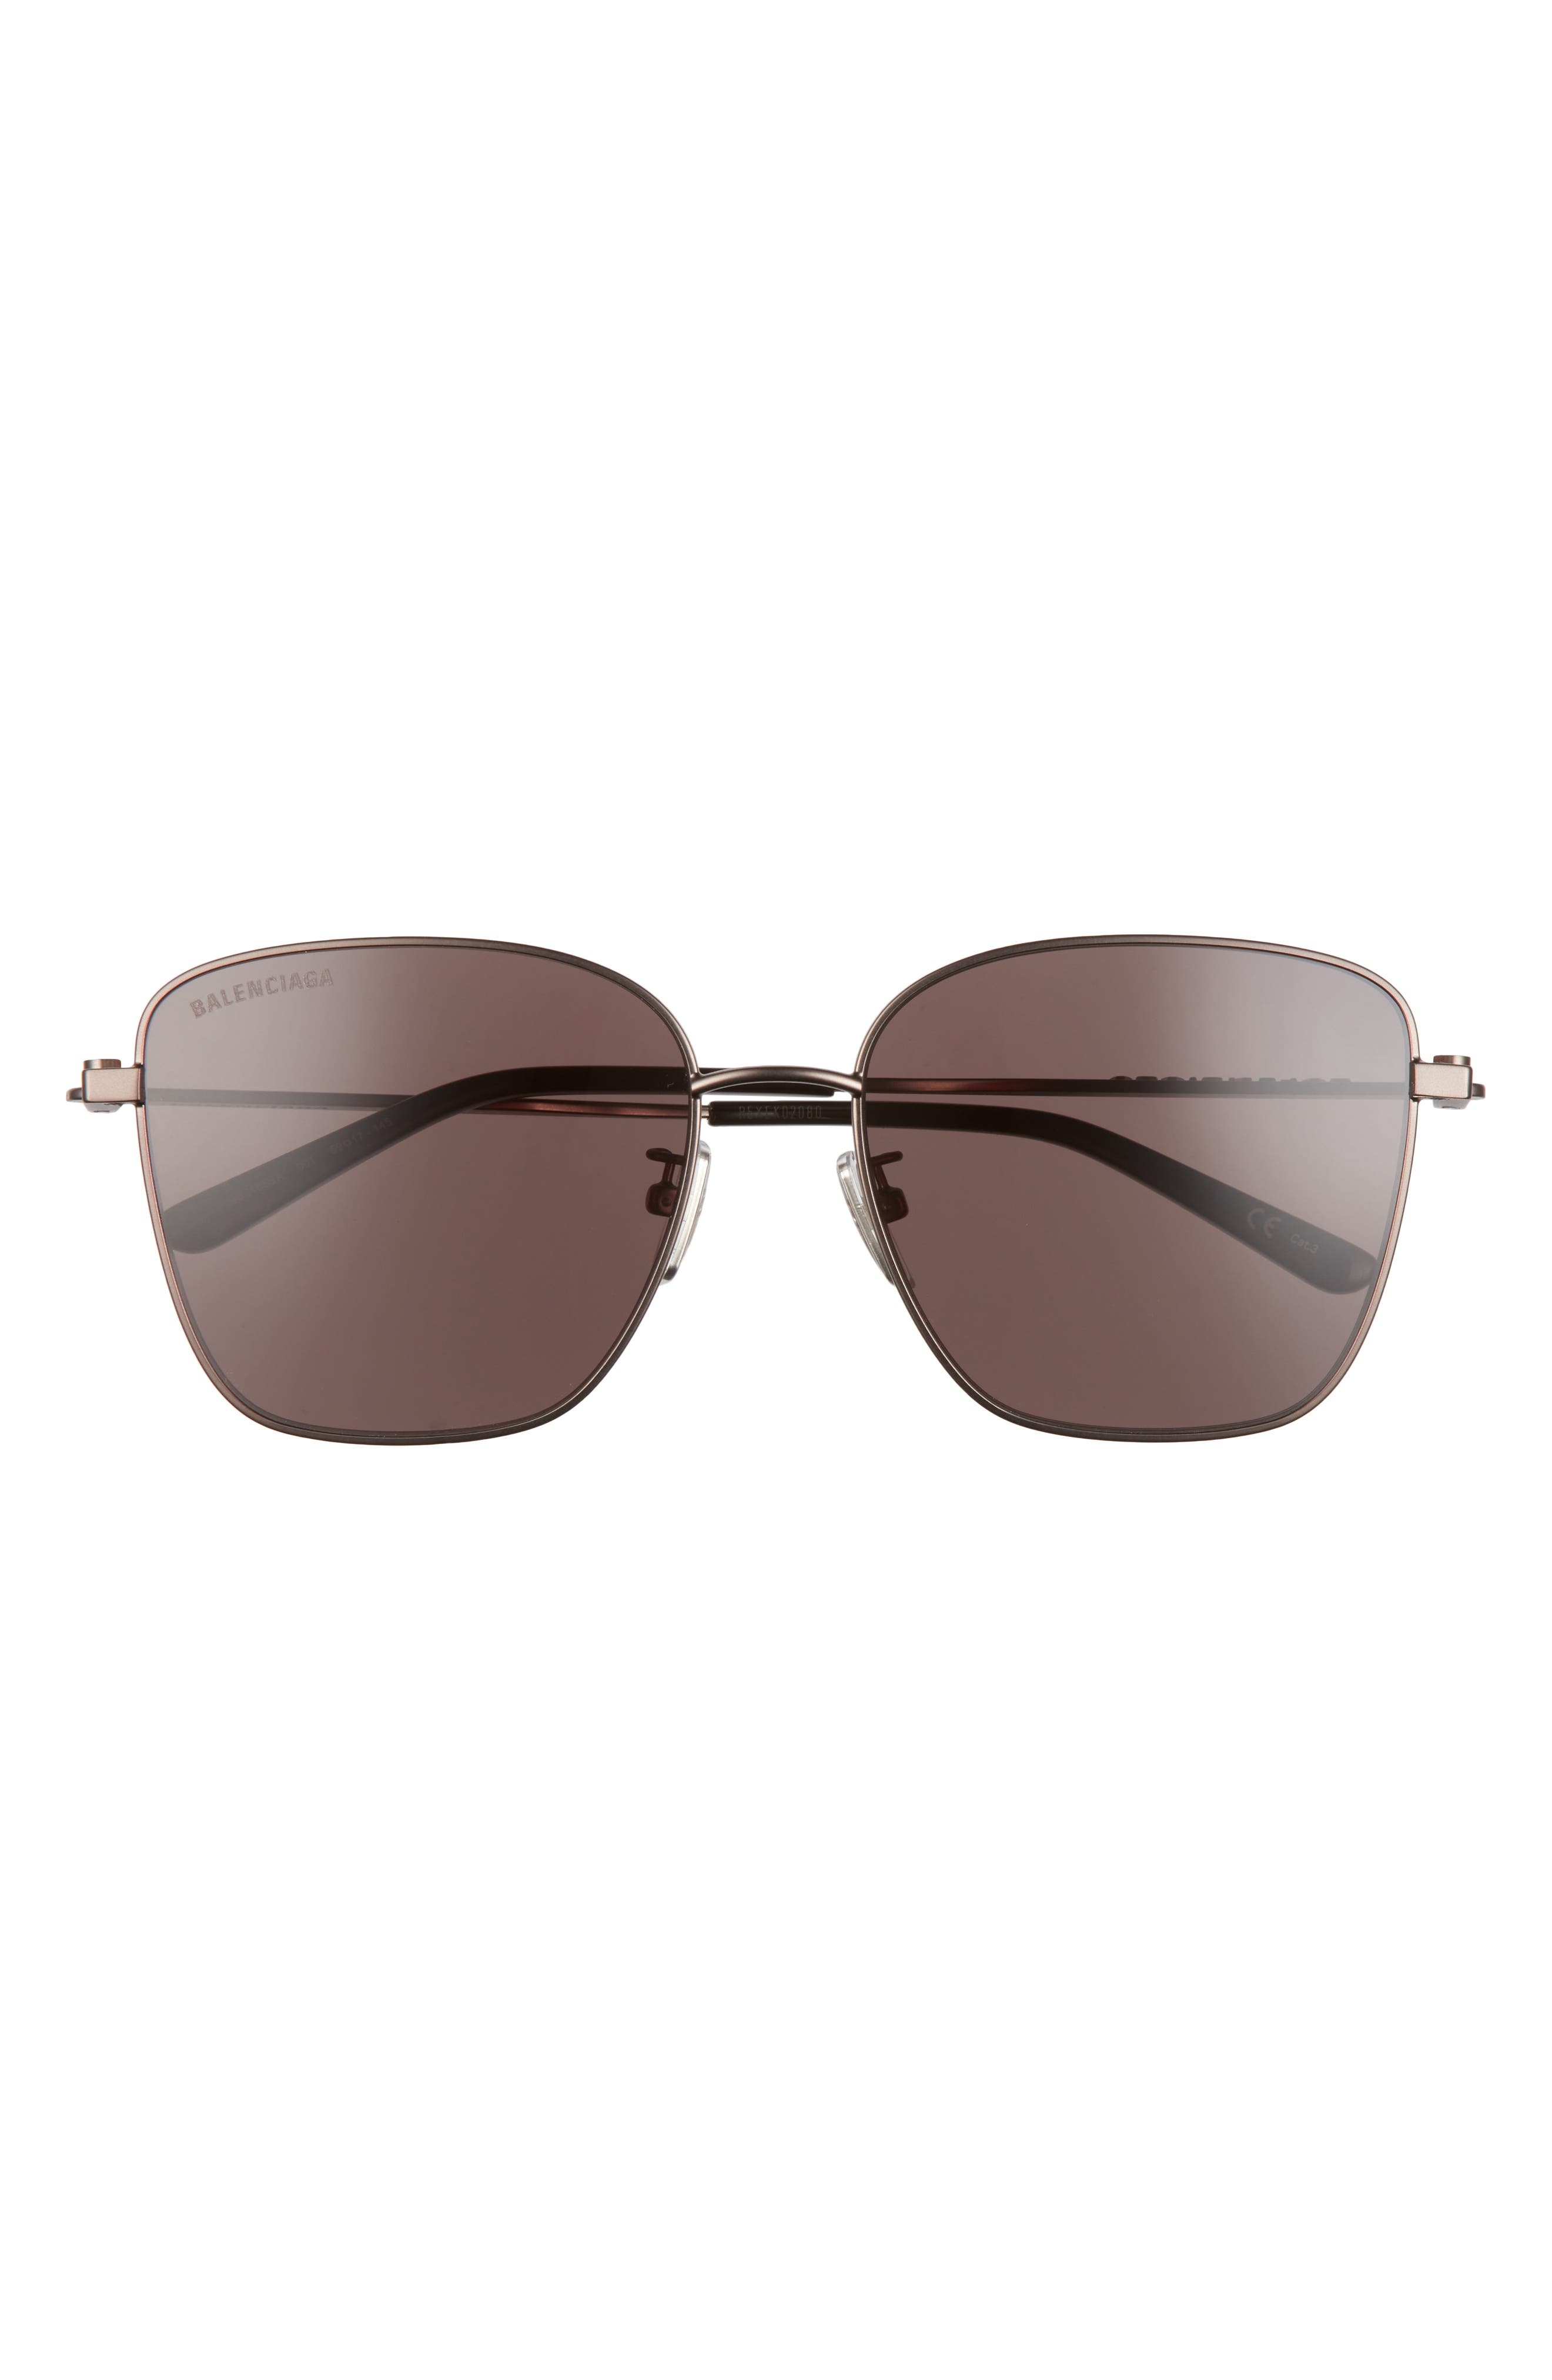 Balenciaga 59mm Square Sunglasses in Grey at Nordstrom